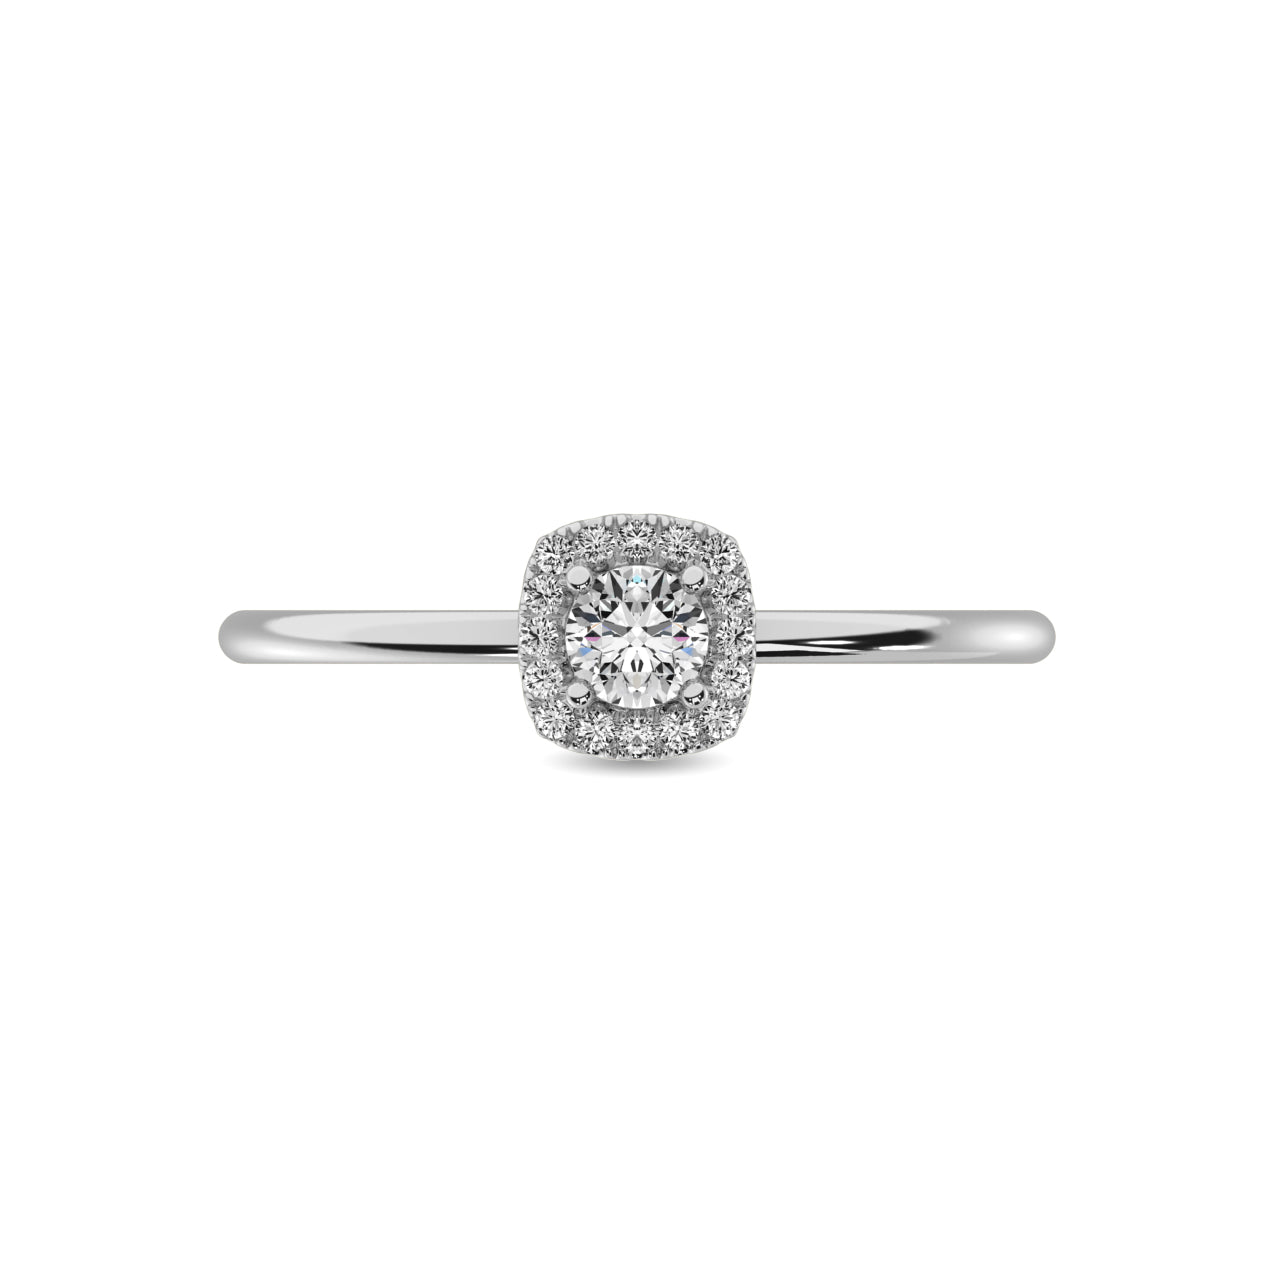 Diamond 1/5 ct tw Round Cut Fashion Ring in 10K White Gold